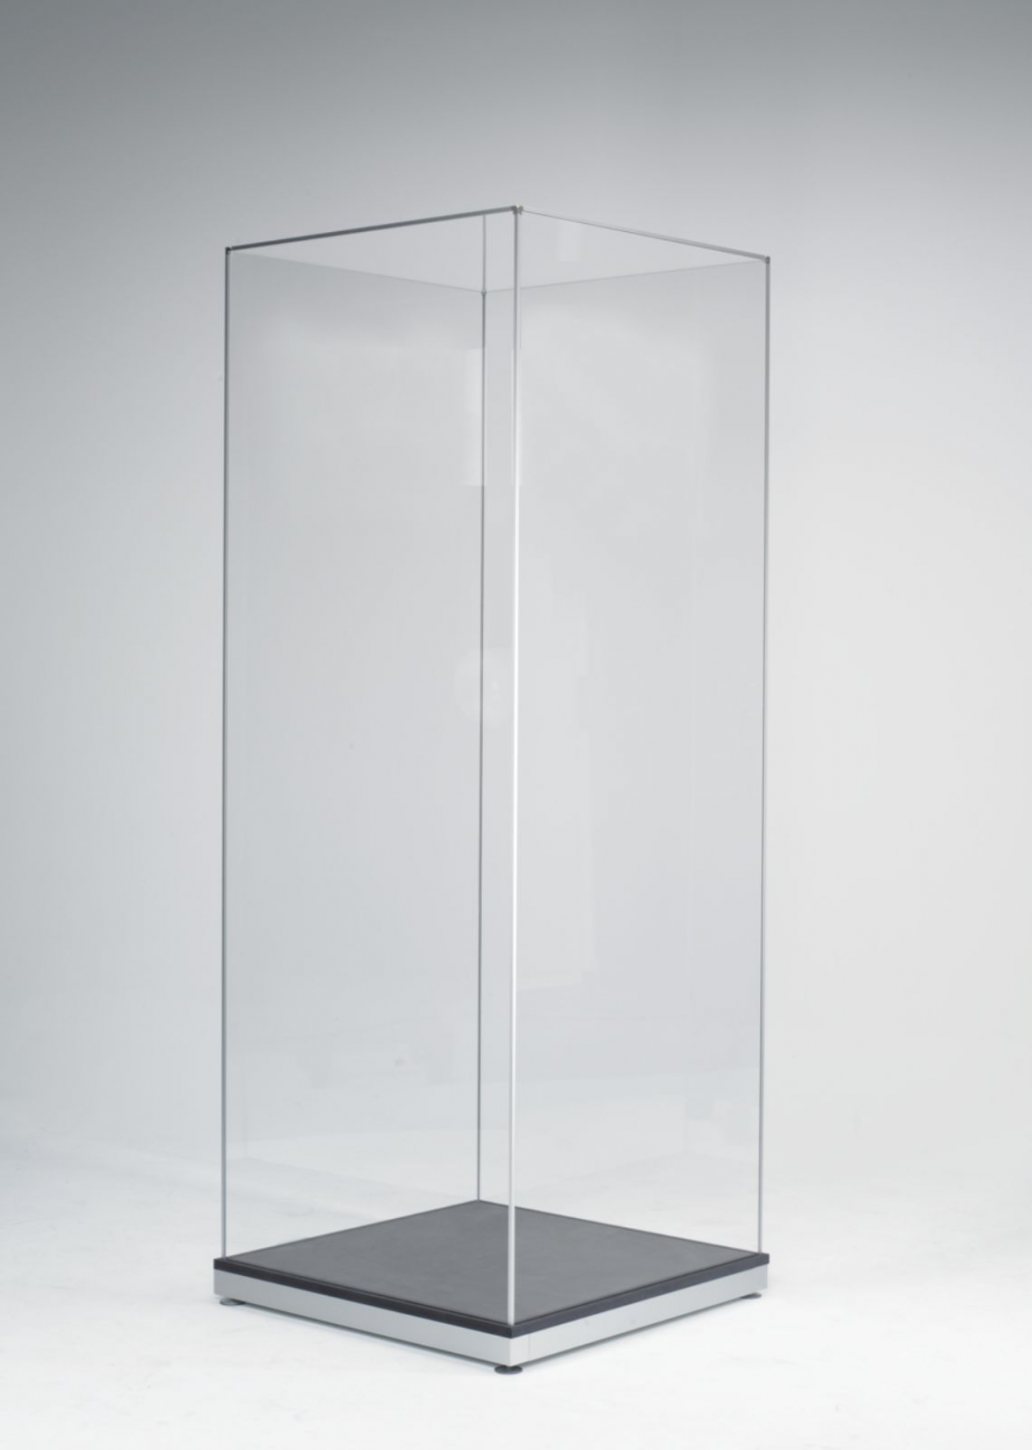 Modular Glass Freestanding Museum Display Case